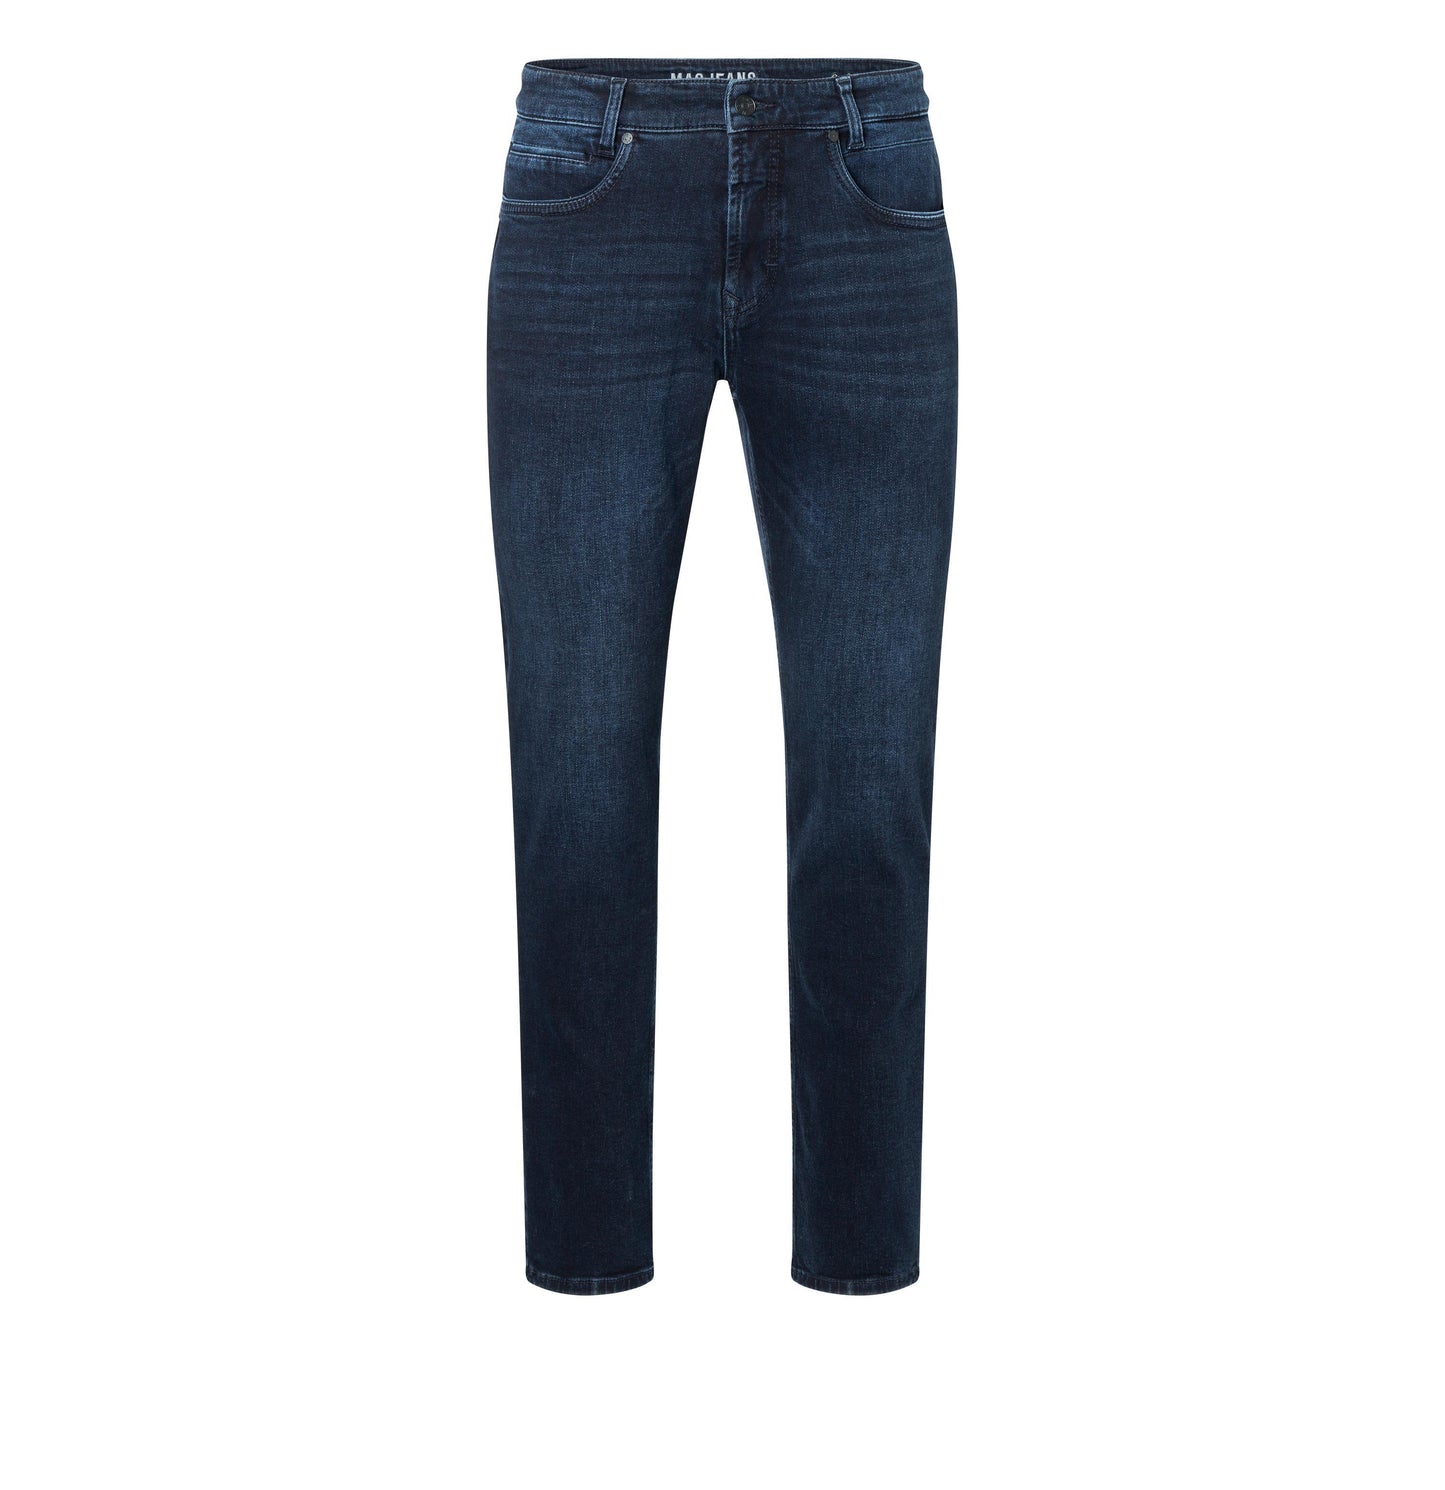 Cashmere blend jeans in dark blue by MAC